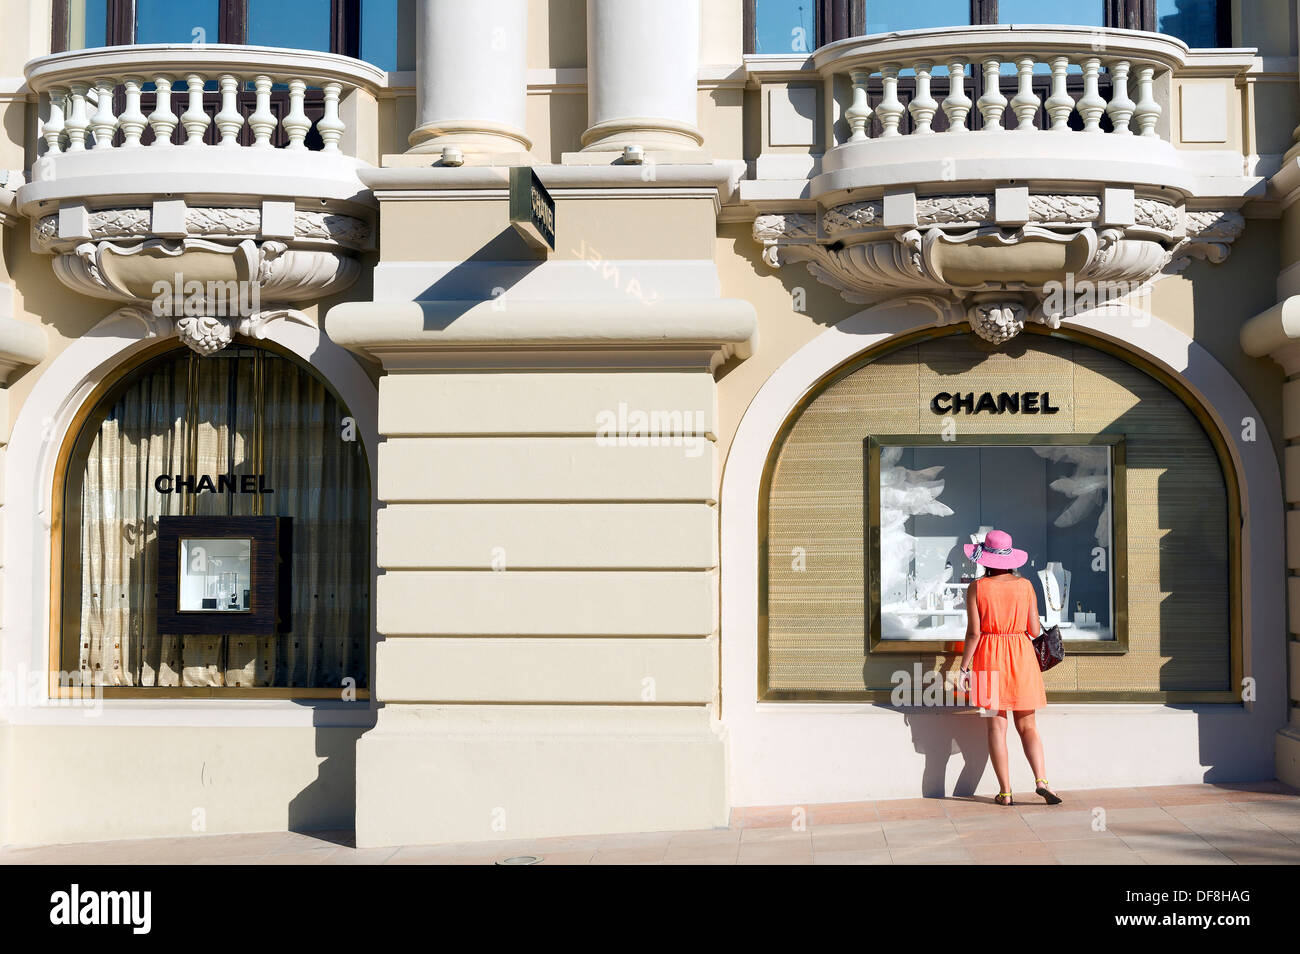 MONTE CARLO, MONACO - JUNE 18, 2022: Facade of Louis Vuitton Store in Monte  Carlo, Monaco. Louis Vuitton is a French Luxury Editorial Photo - Image of  famous, france: 267013691